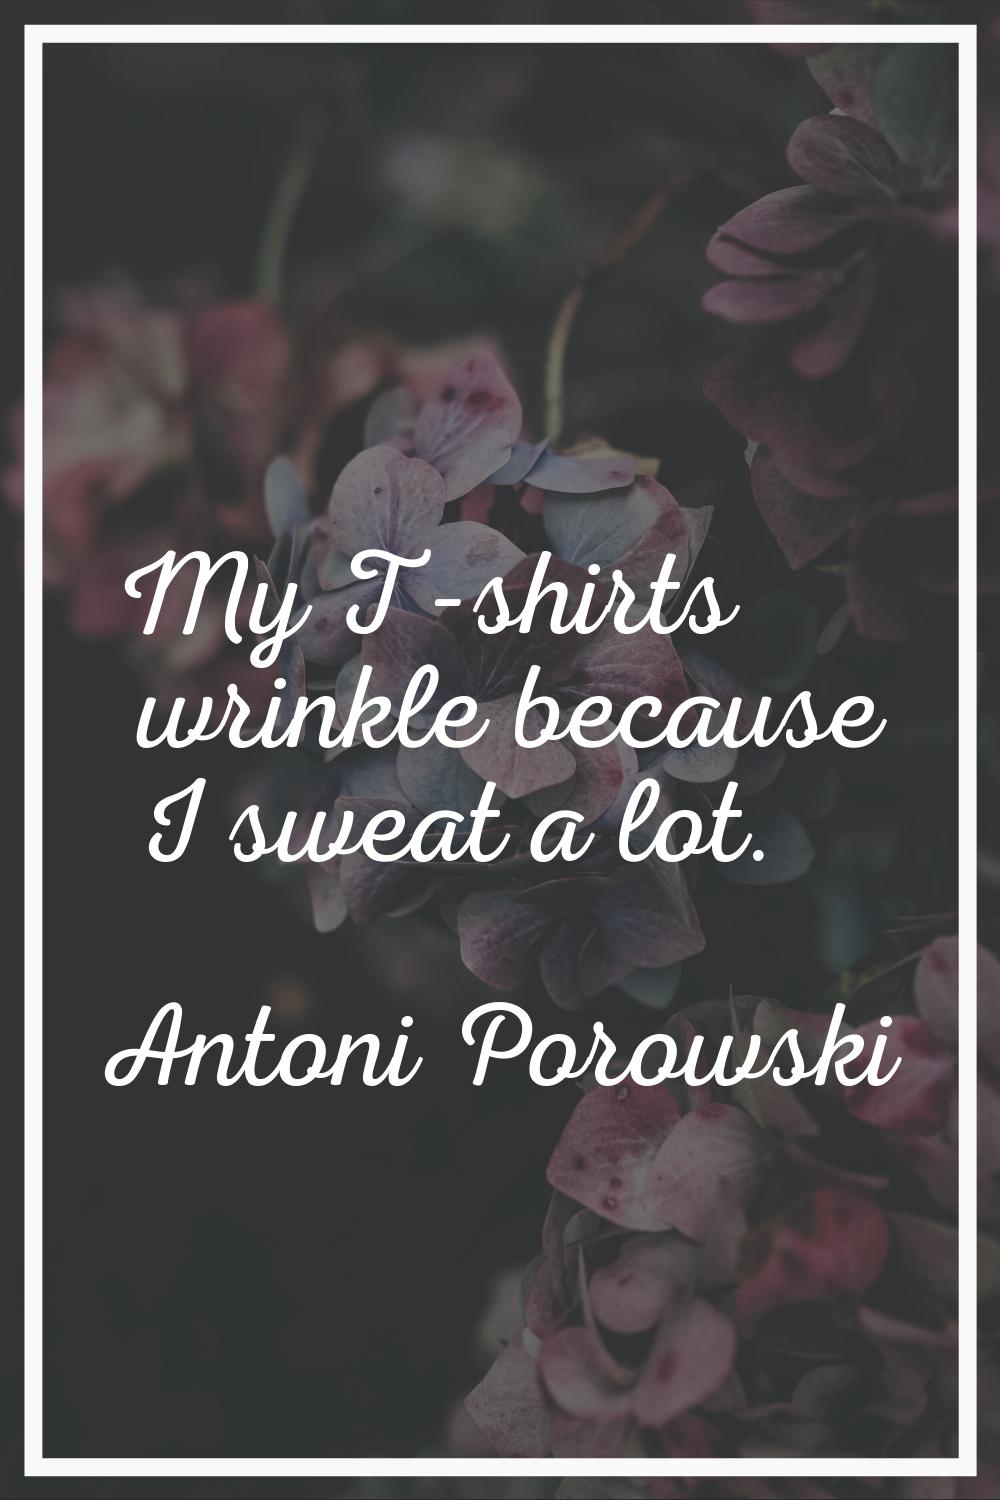 My T-shirts wrinkle because I sweat a lot.